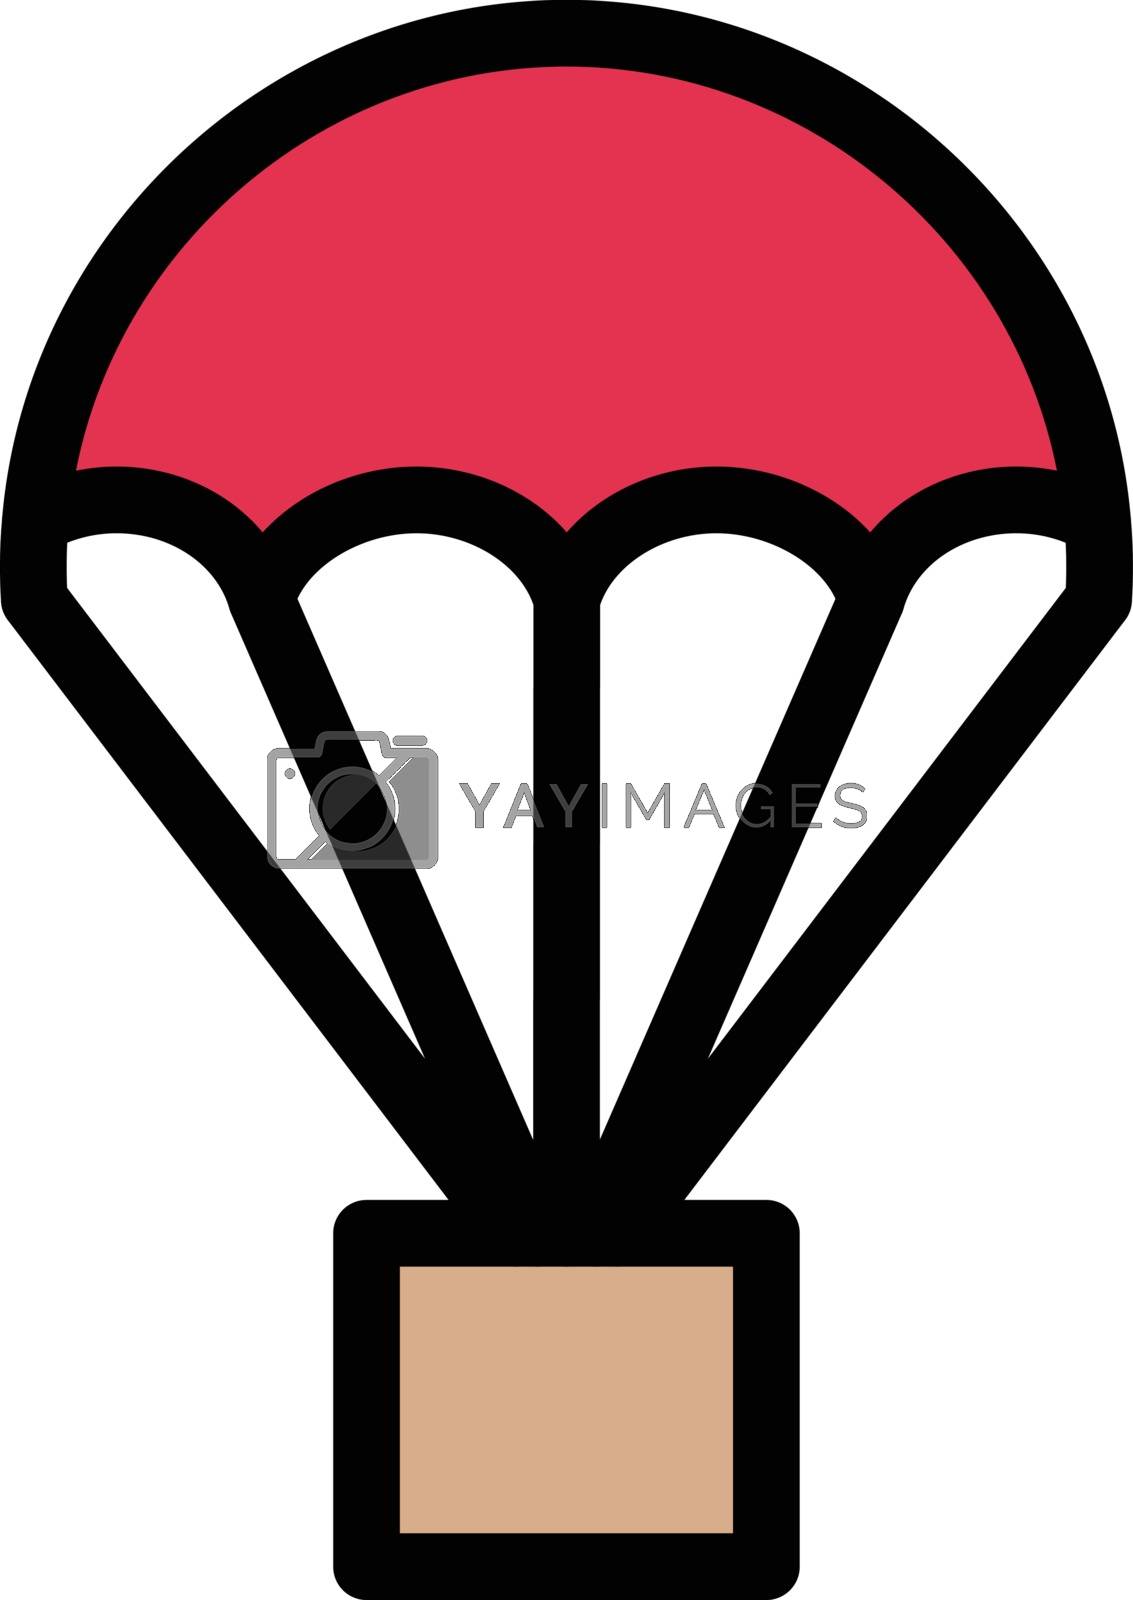 Royalty free image of air balloon by vectorstall